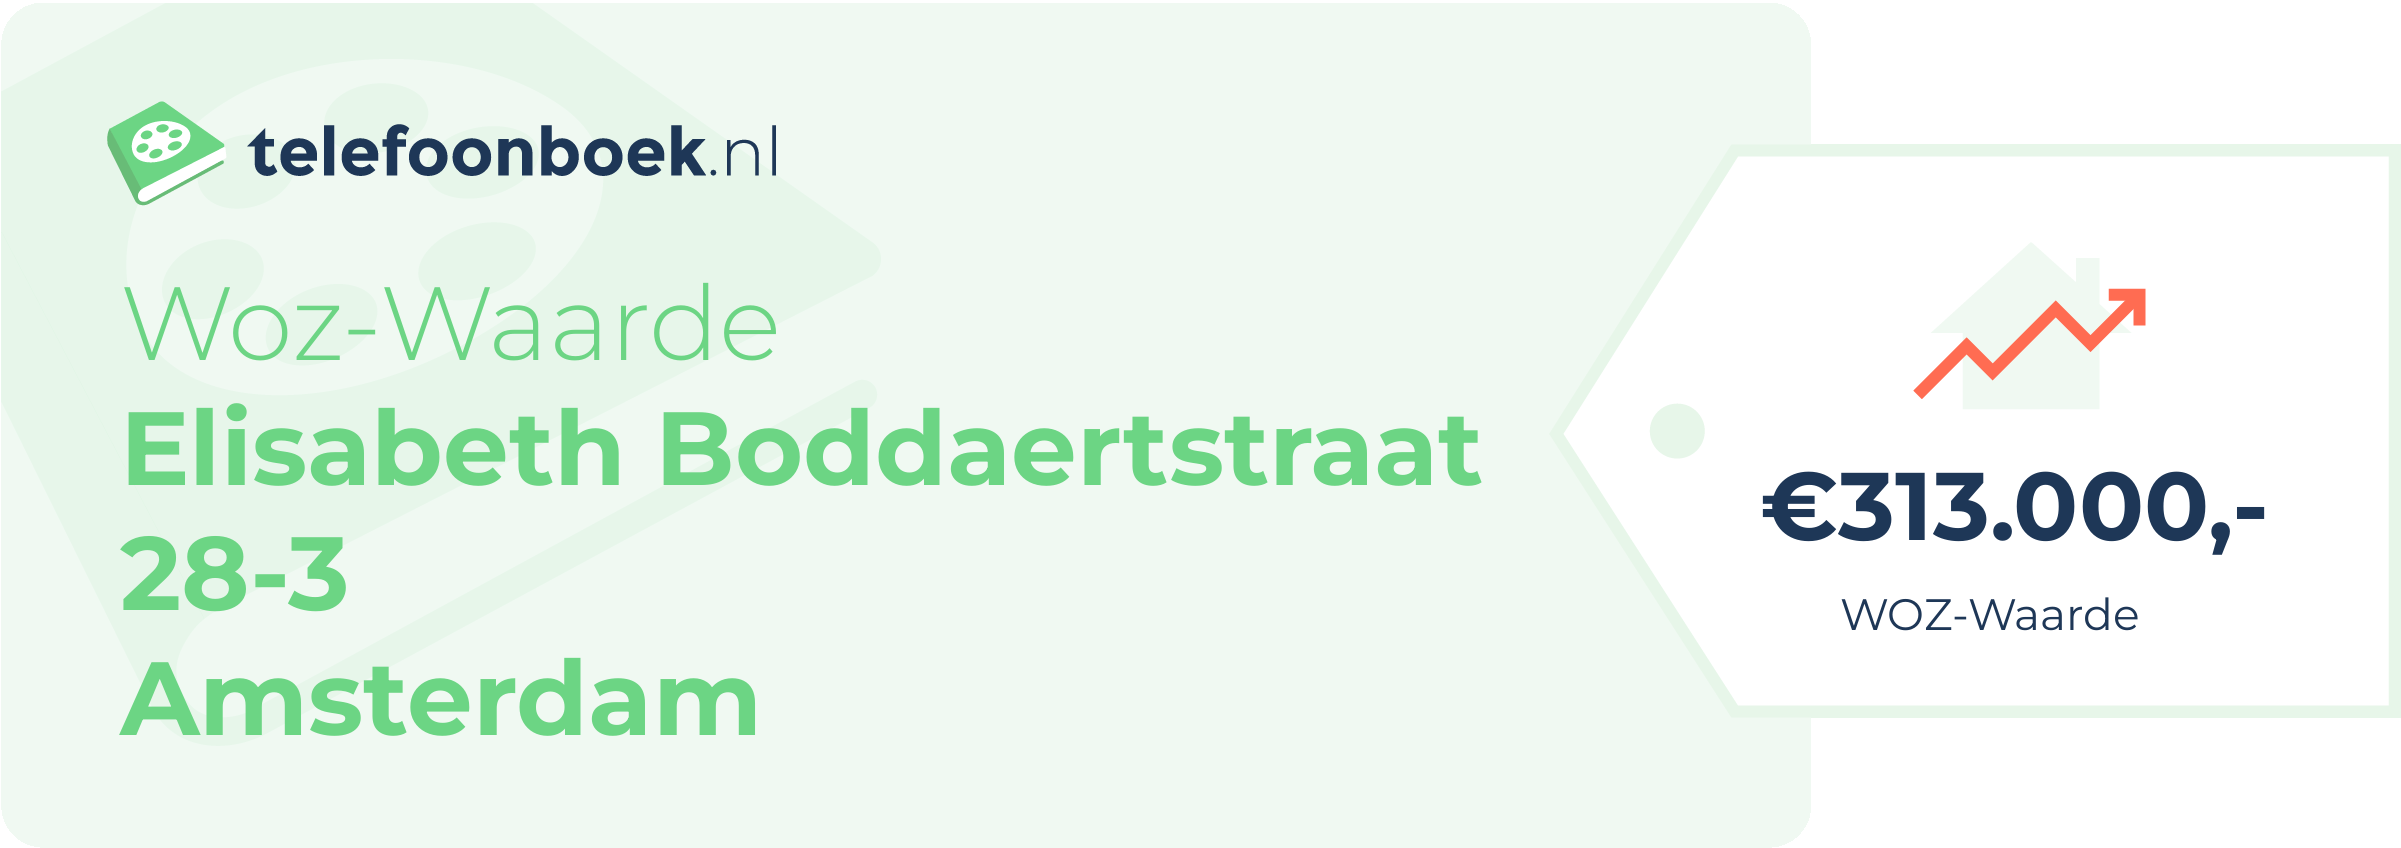 WOZ-waarde Elisabeth Boddaertstraat 28-3 Amsterdam